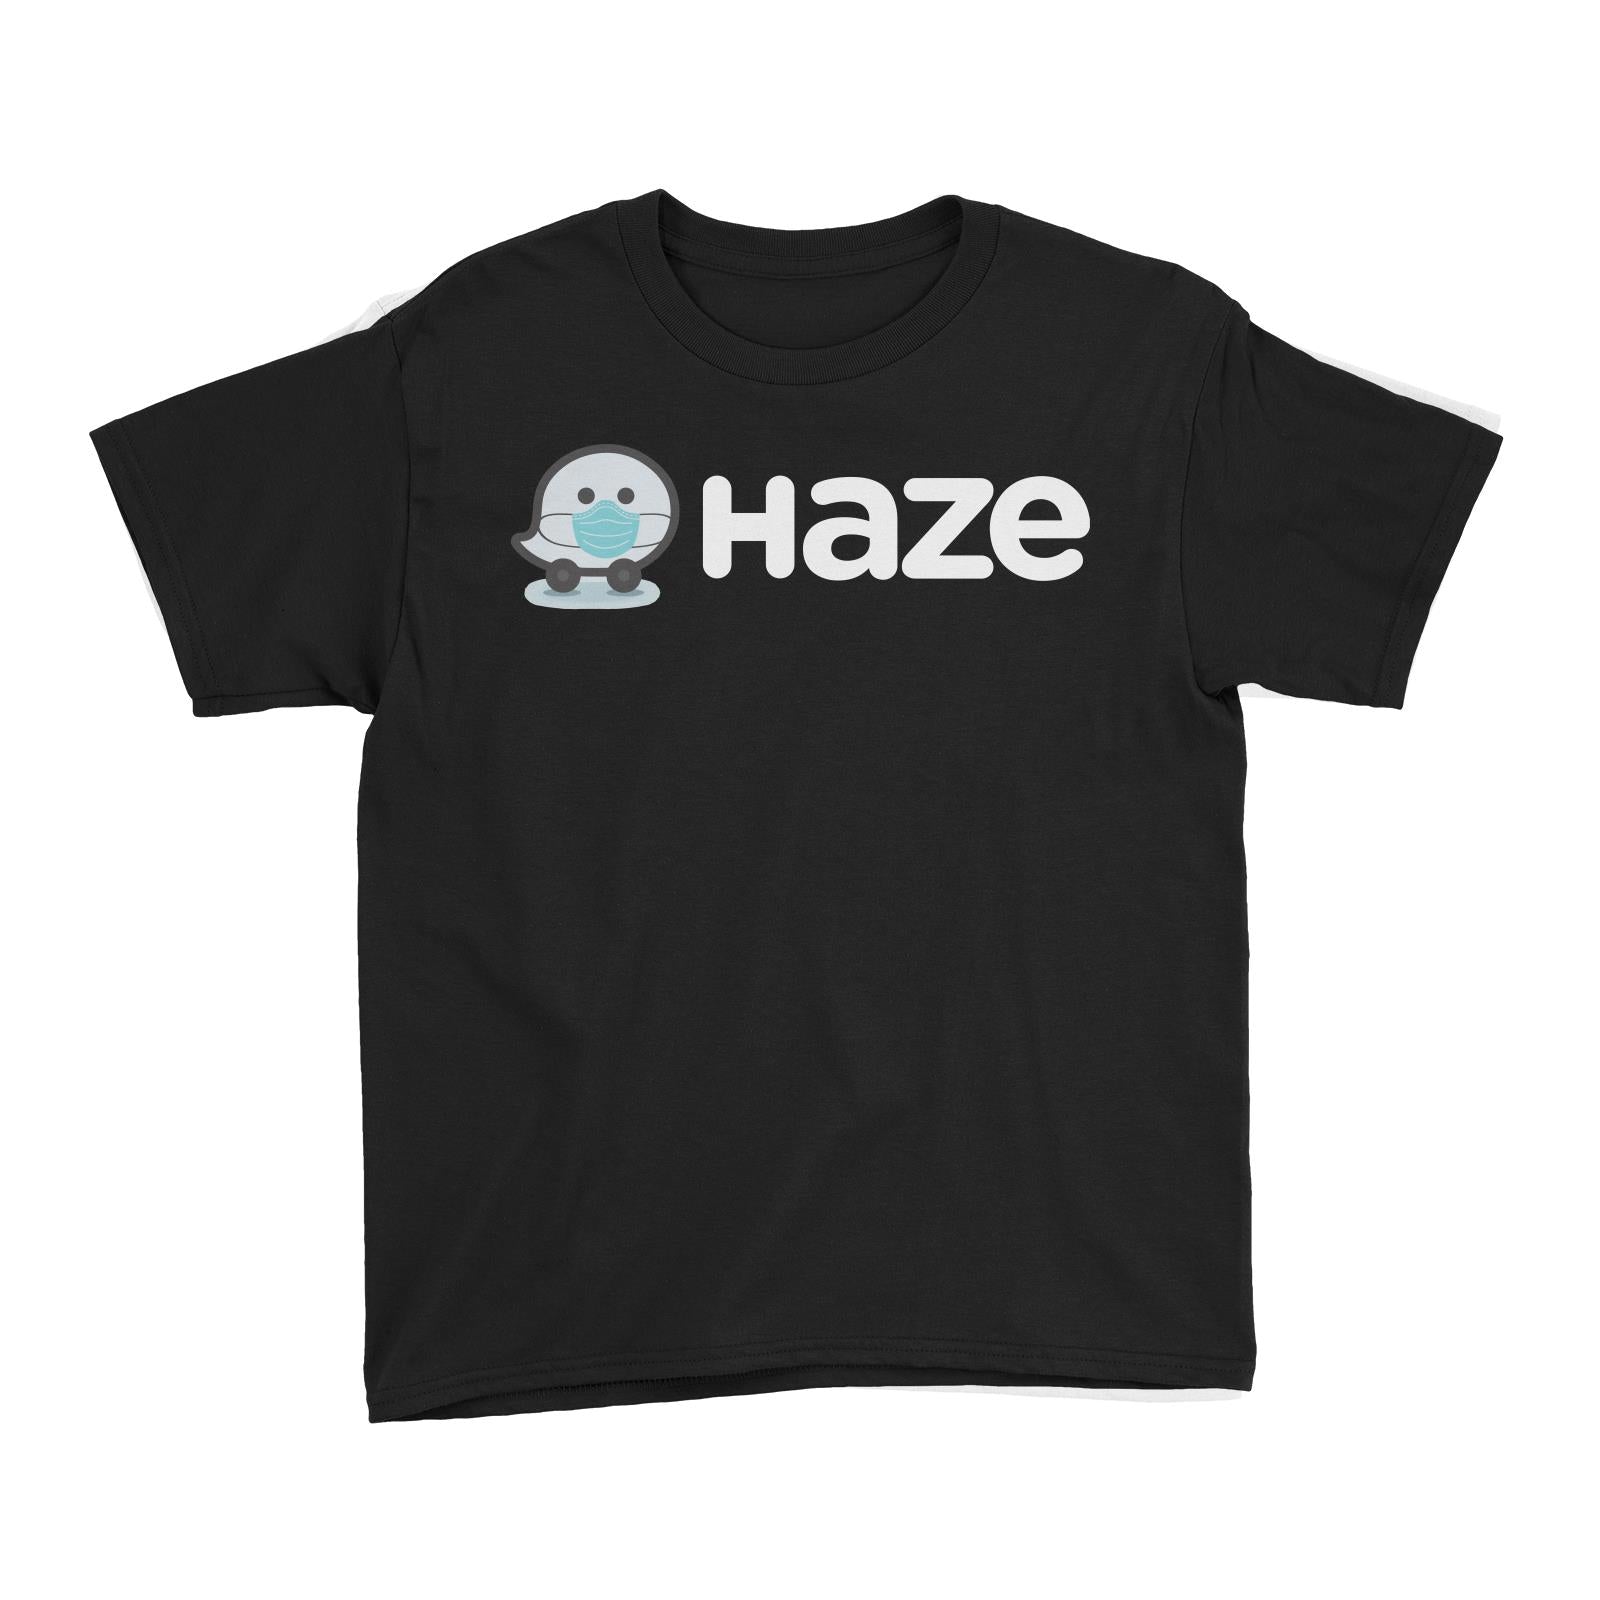 Slang Statement Haze Kid's T-Shirt